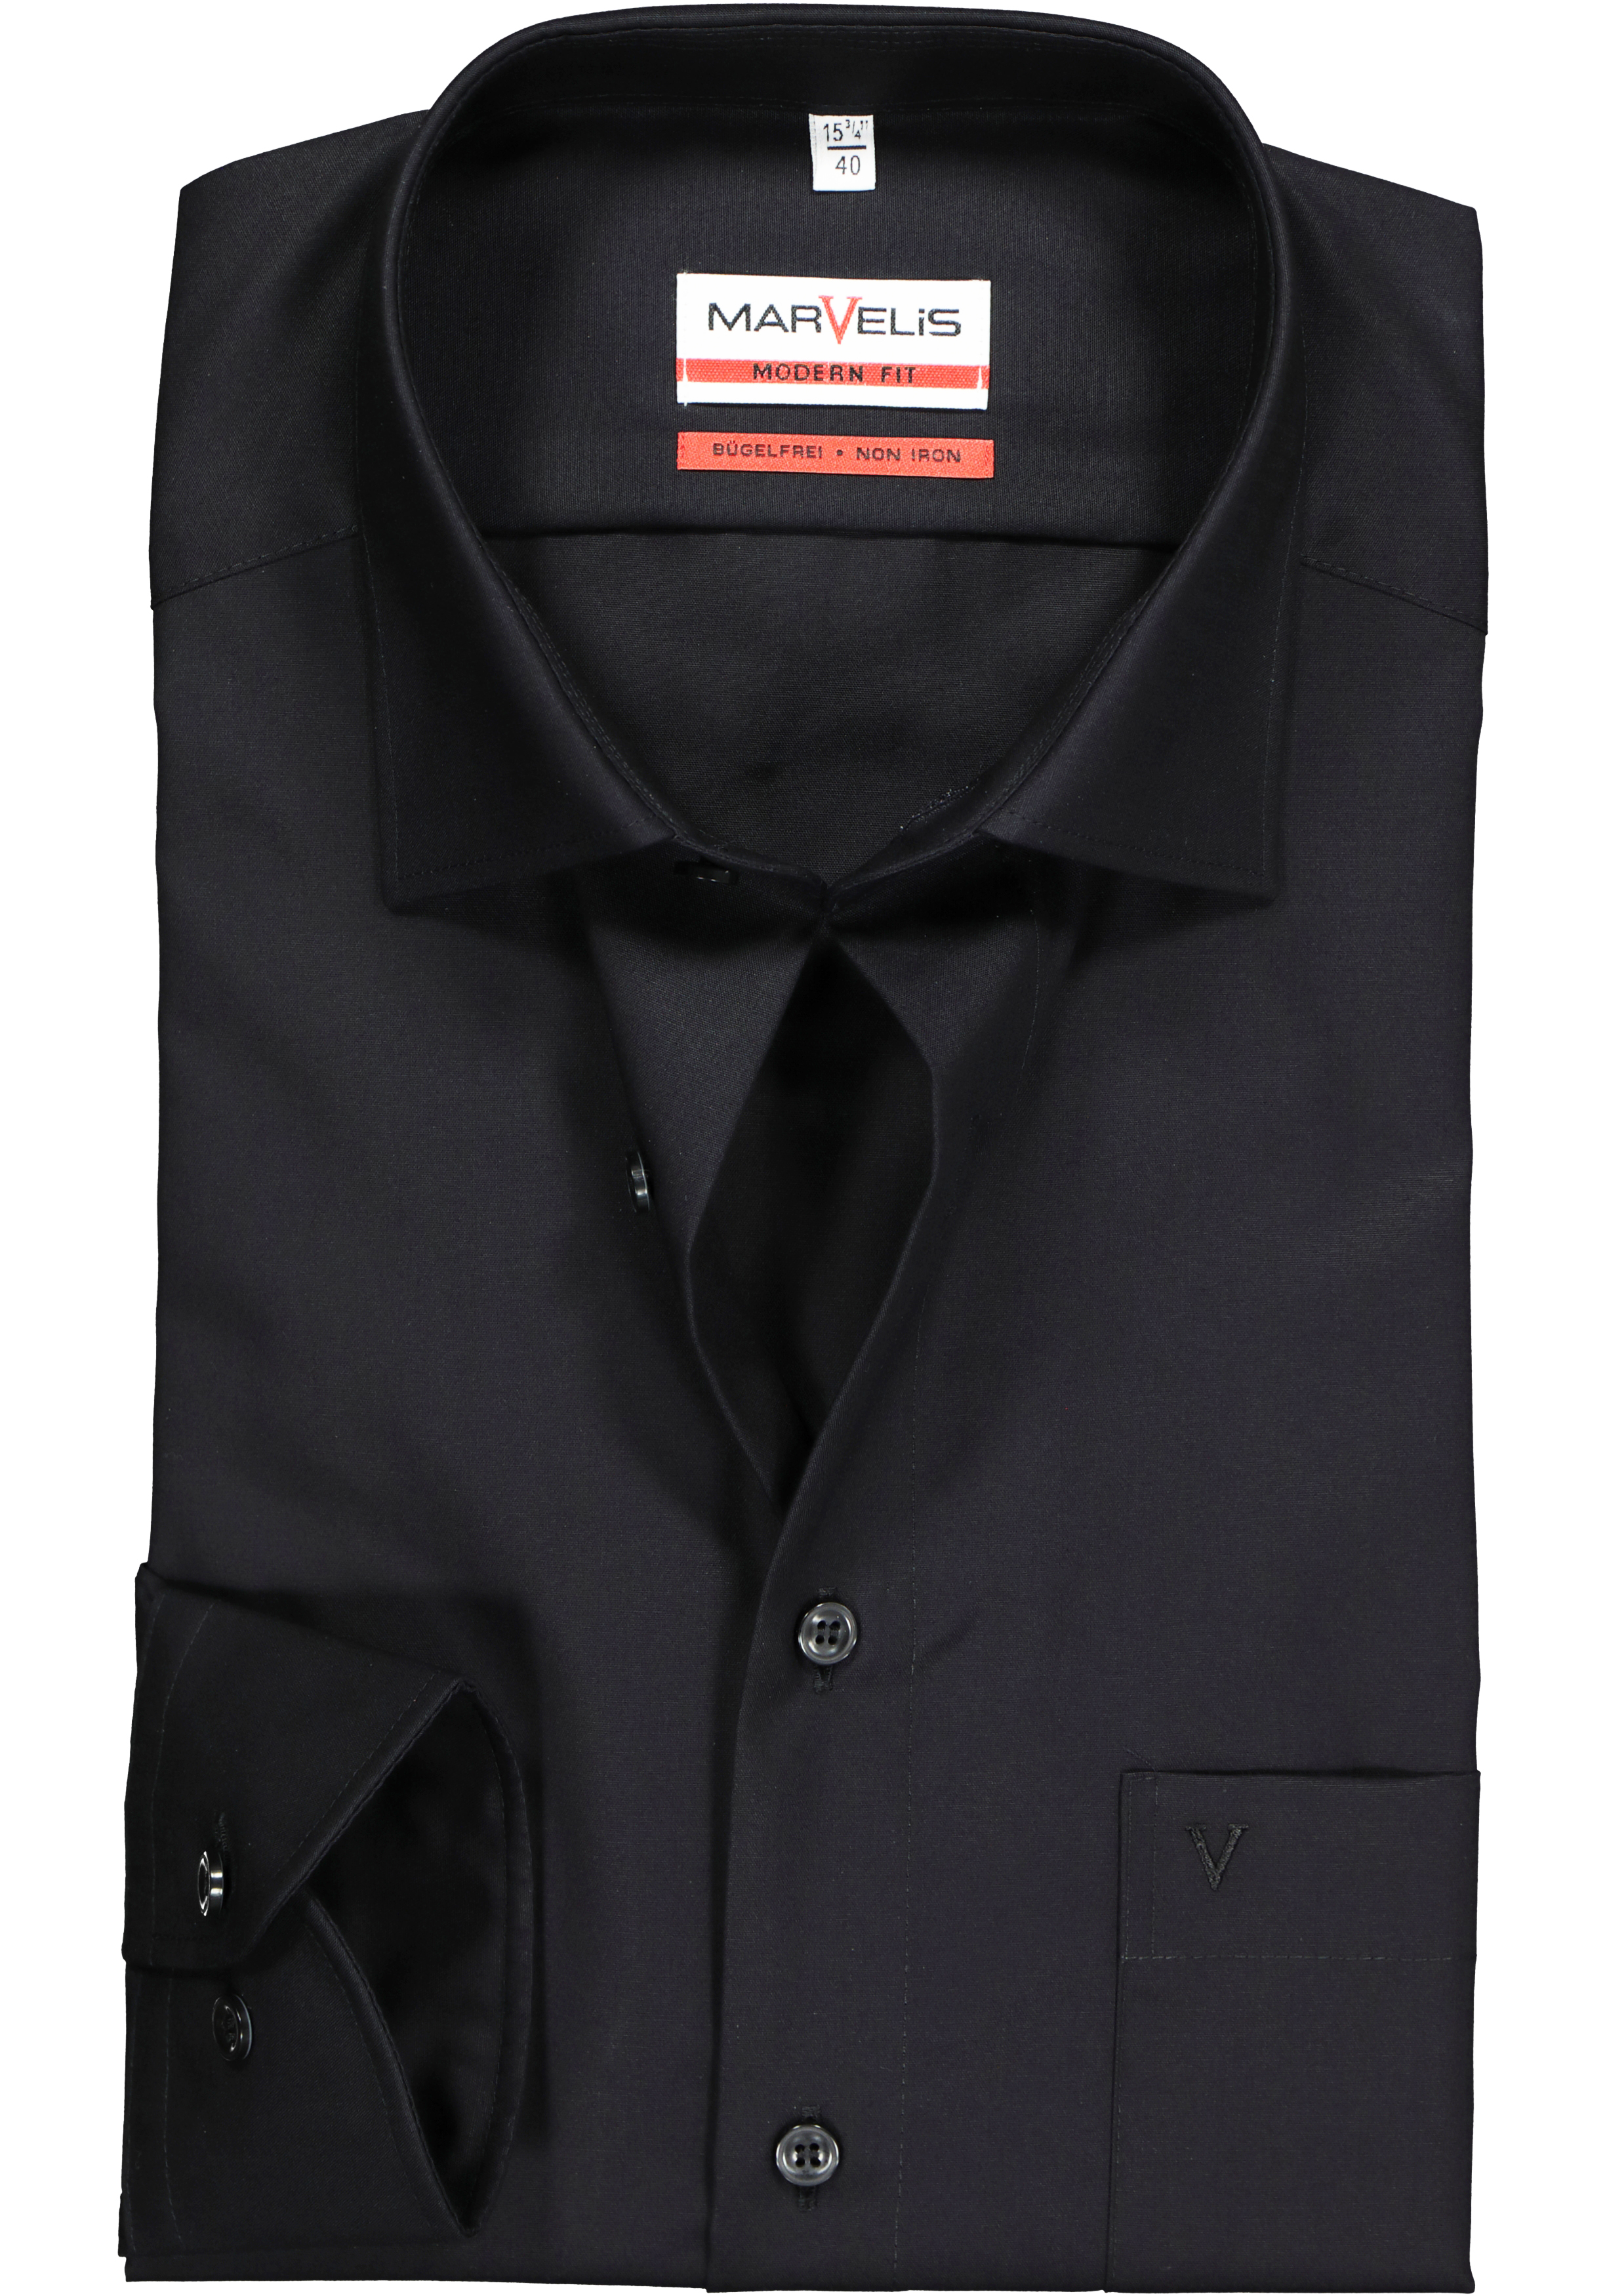 MARVELIS modern fit overhemd, zwart